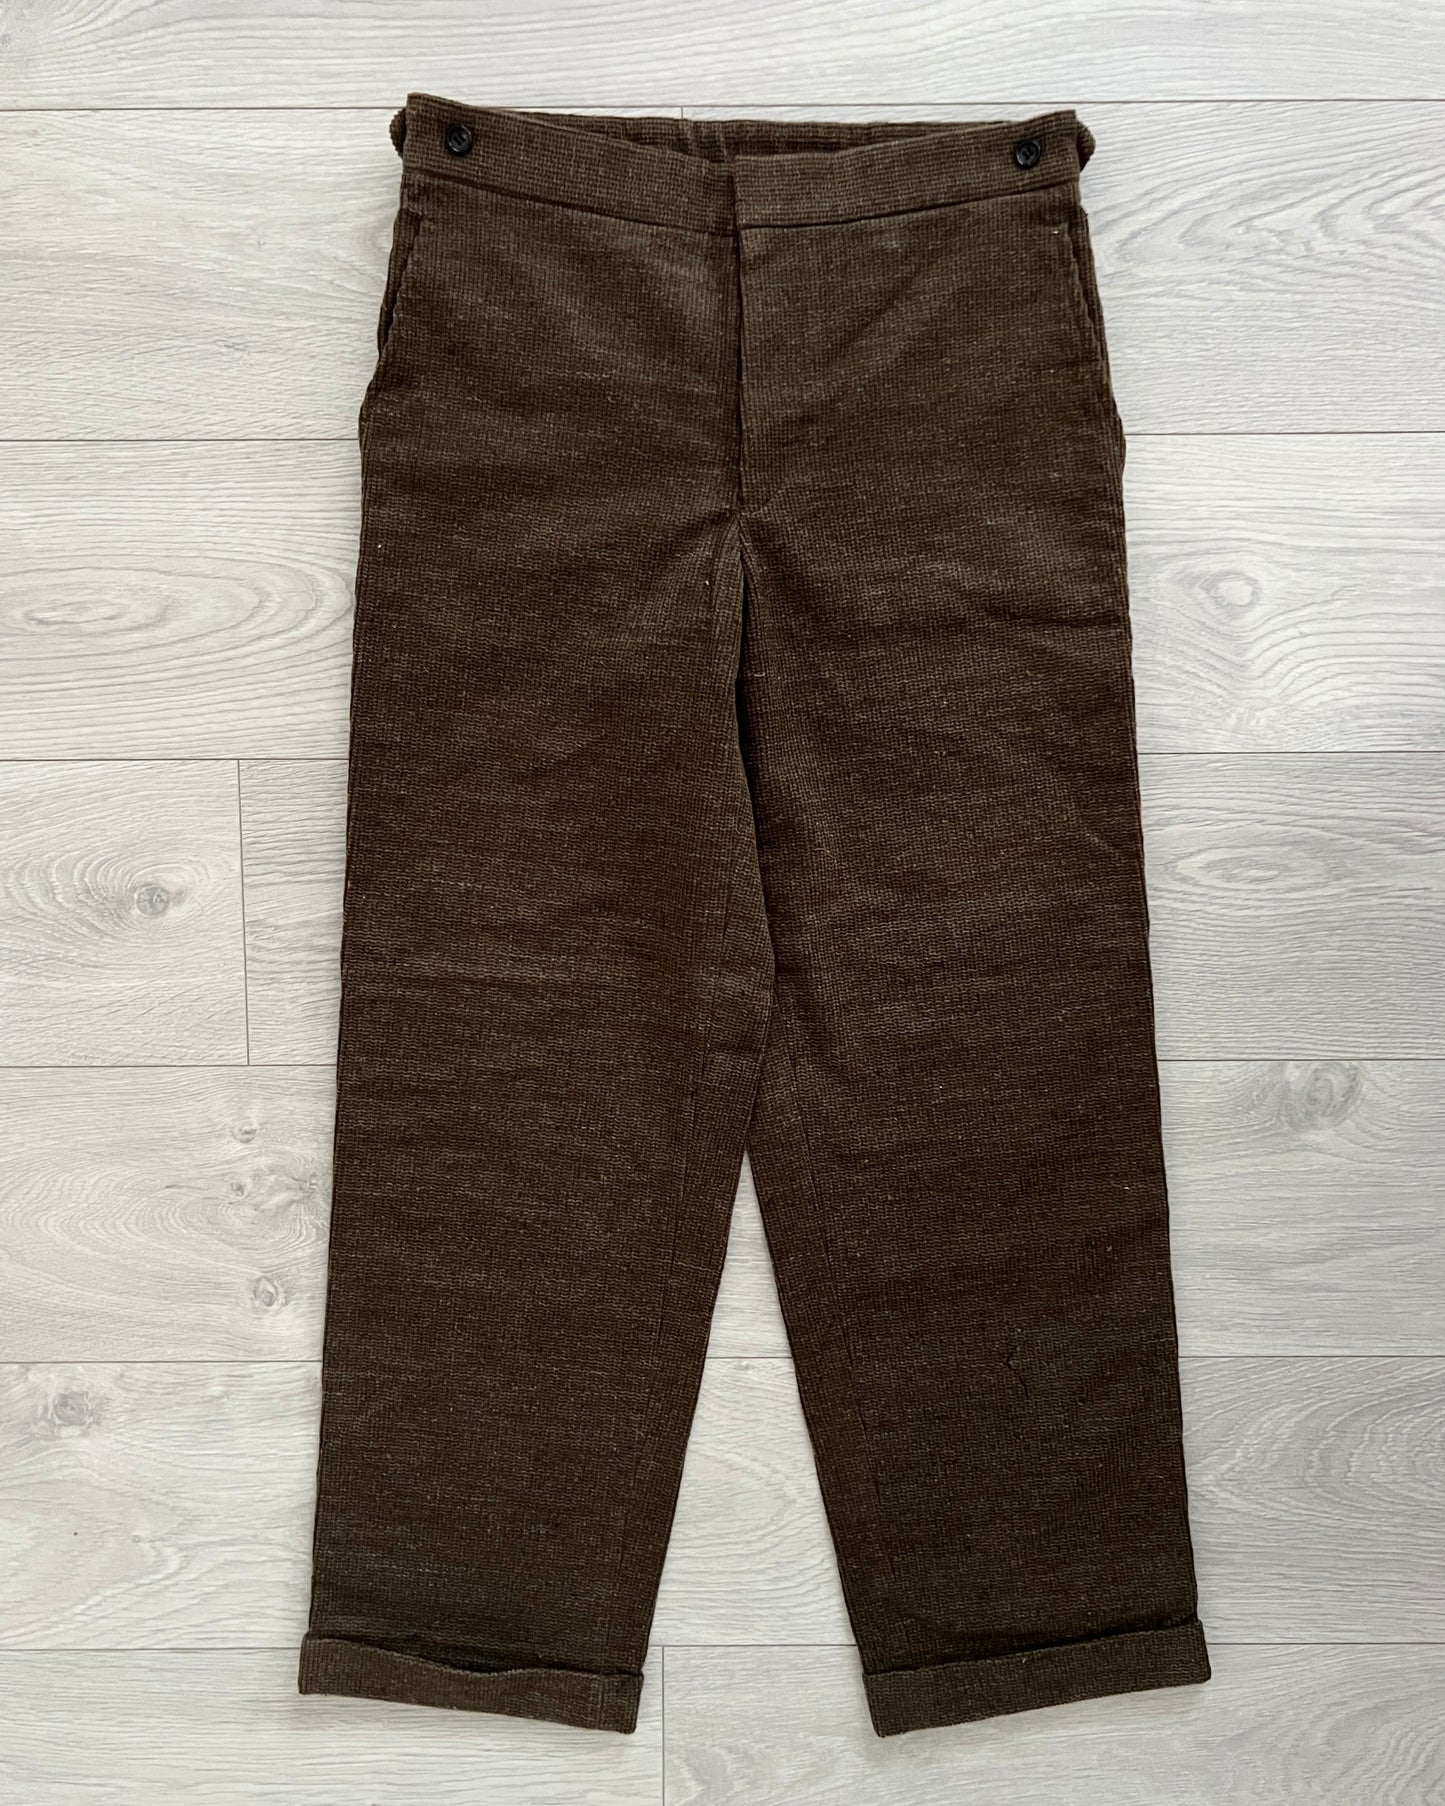 Comme Des Garcons Homme Plus 1990s Sample Wool Trousers - Size 30